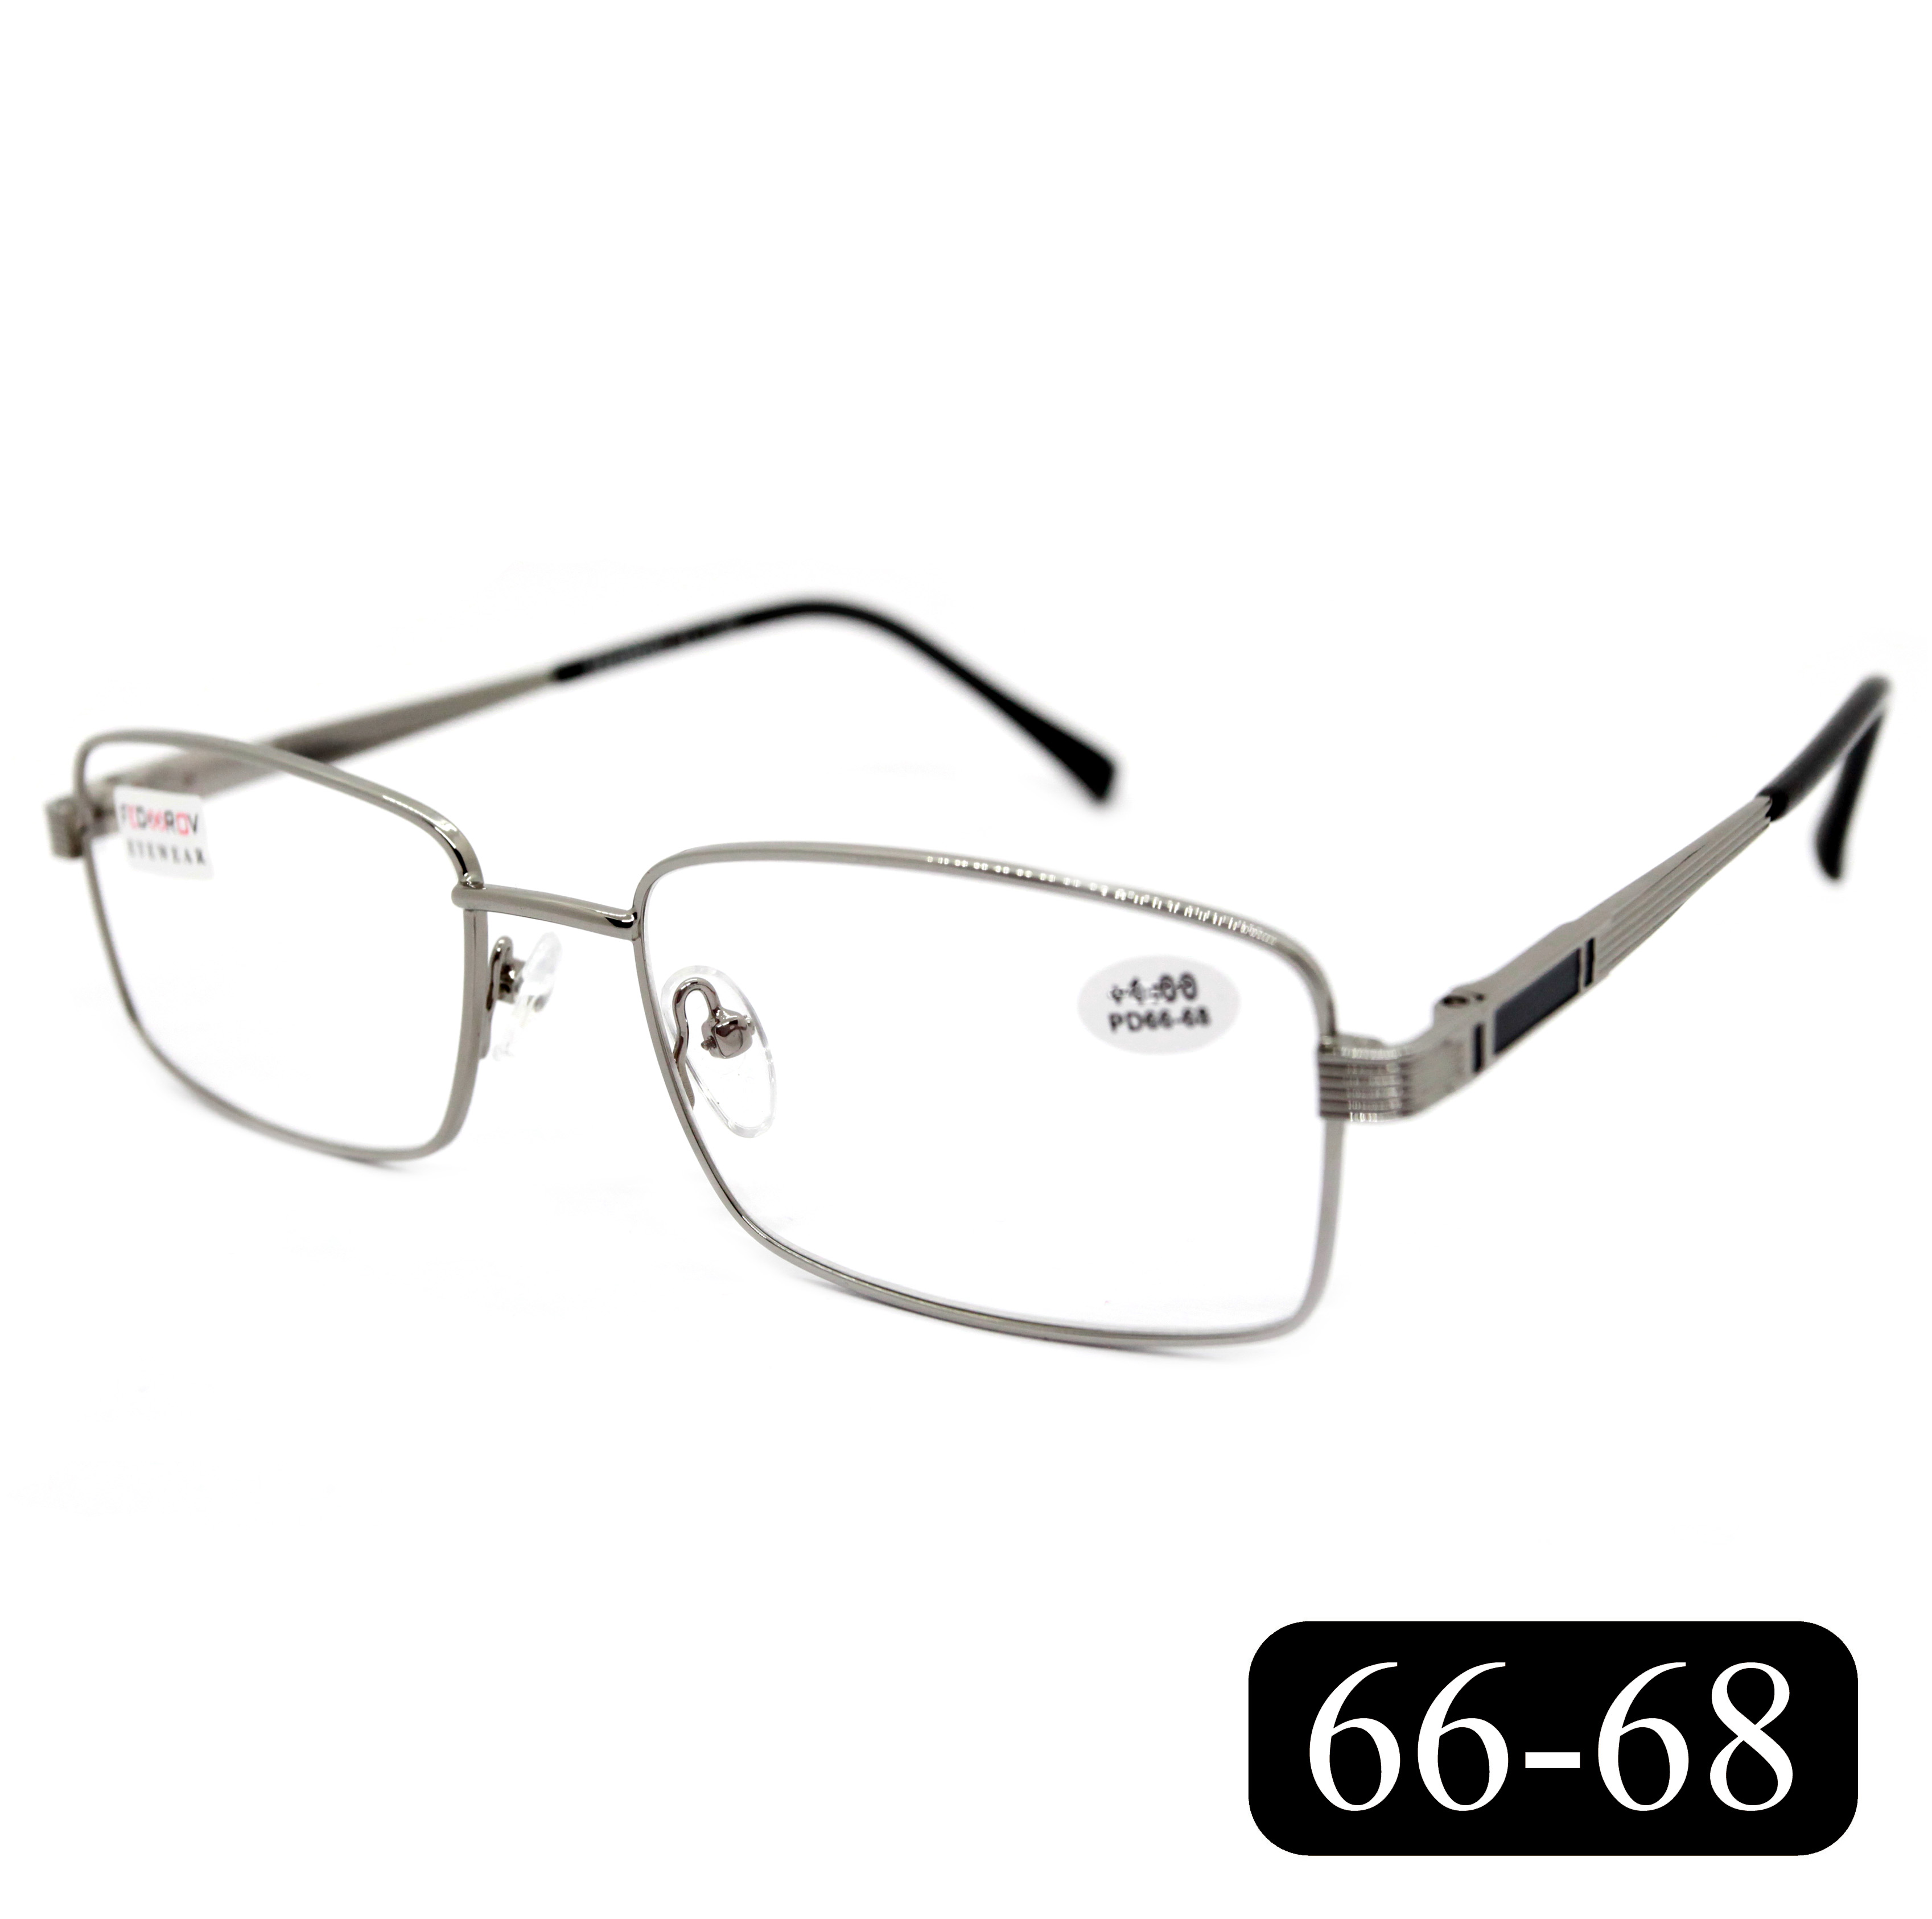 Готовые очки Fedrov 556 +1,00, без футляра, с антибликом, серебристый, РЦ 66-68